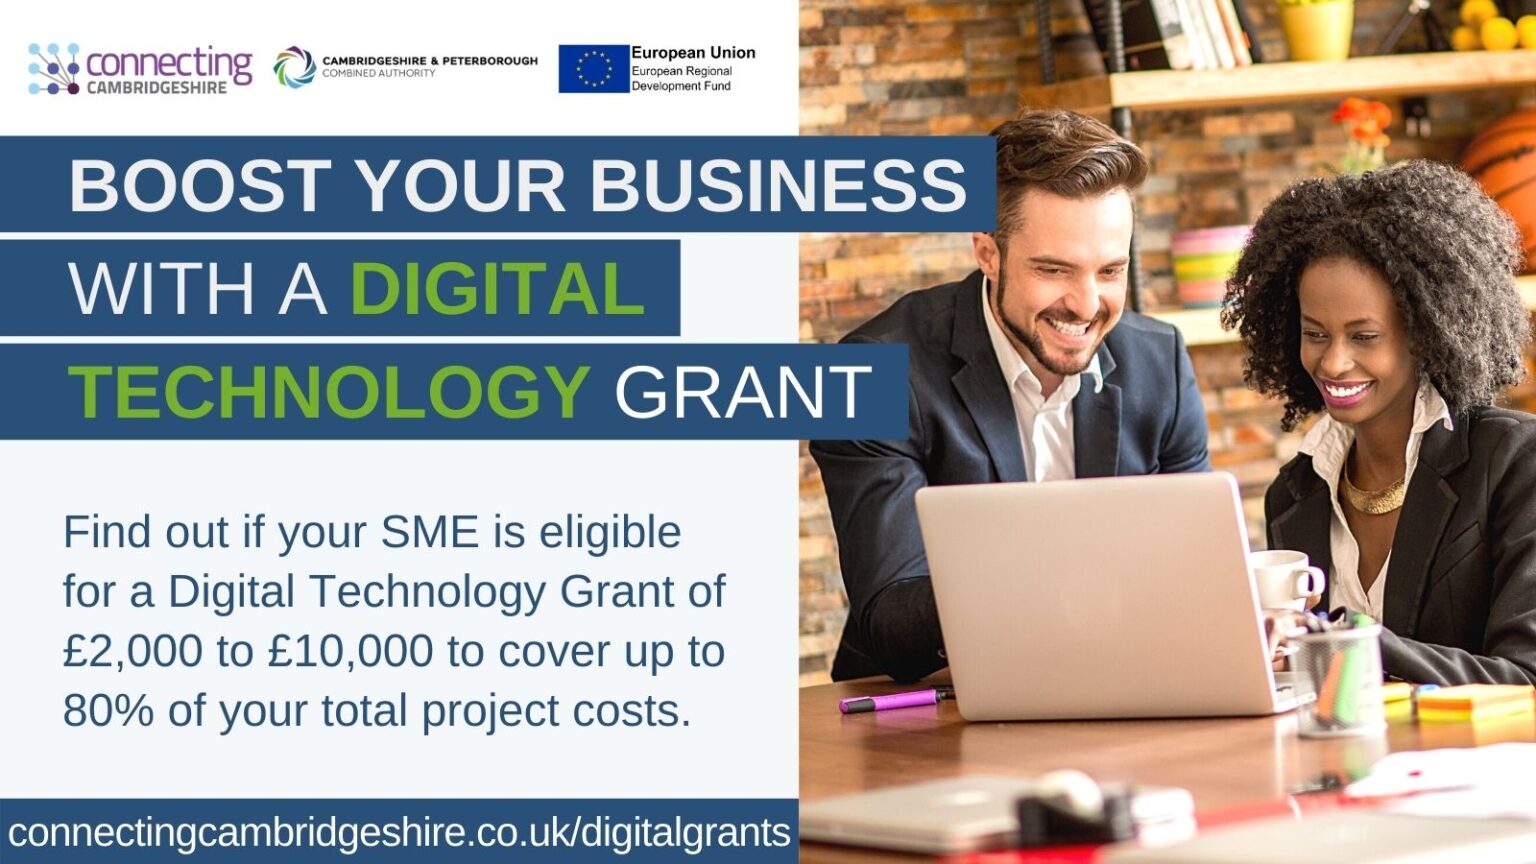 Digital Technology Grant scheme set to inject upwards of £1.4million to